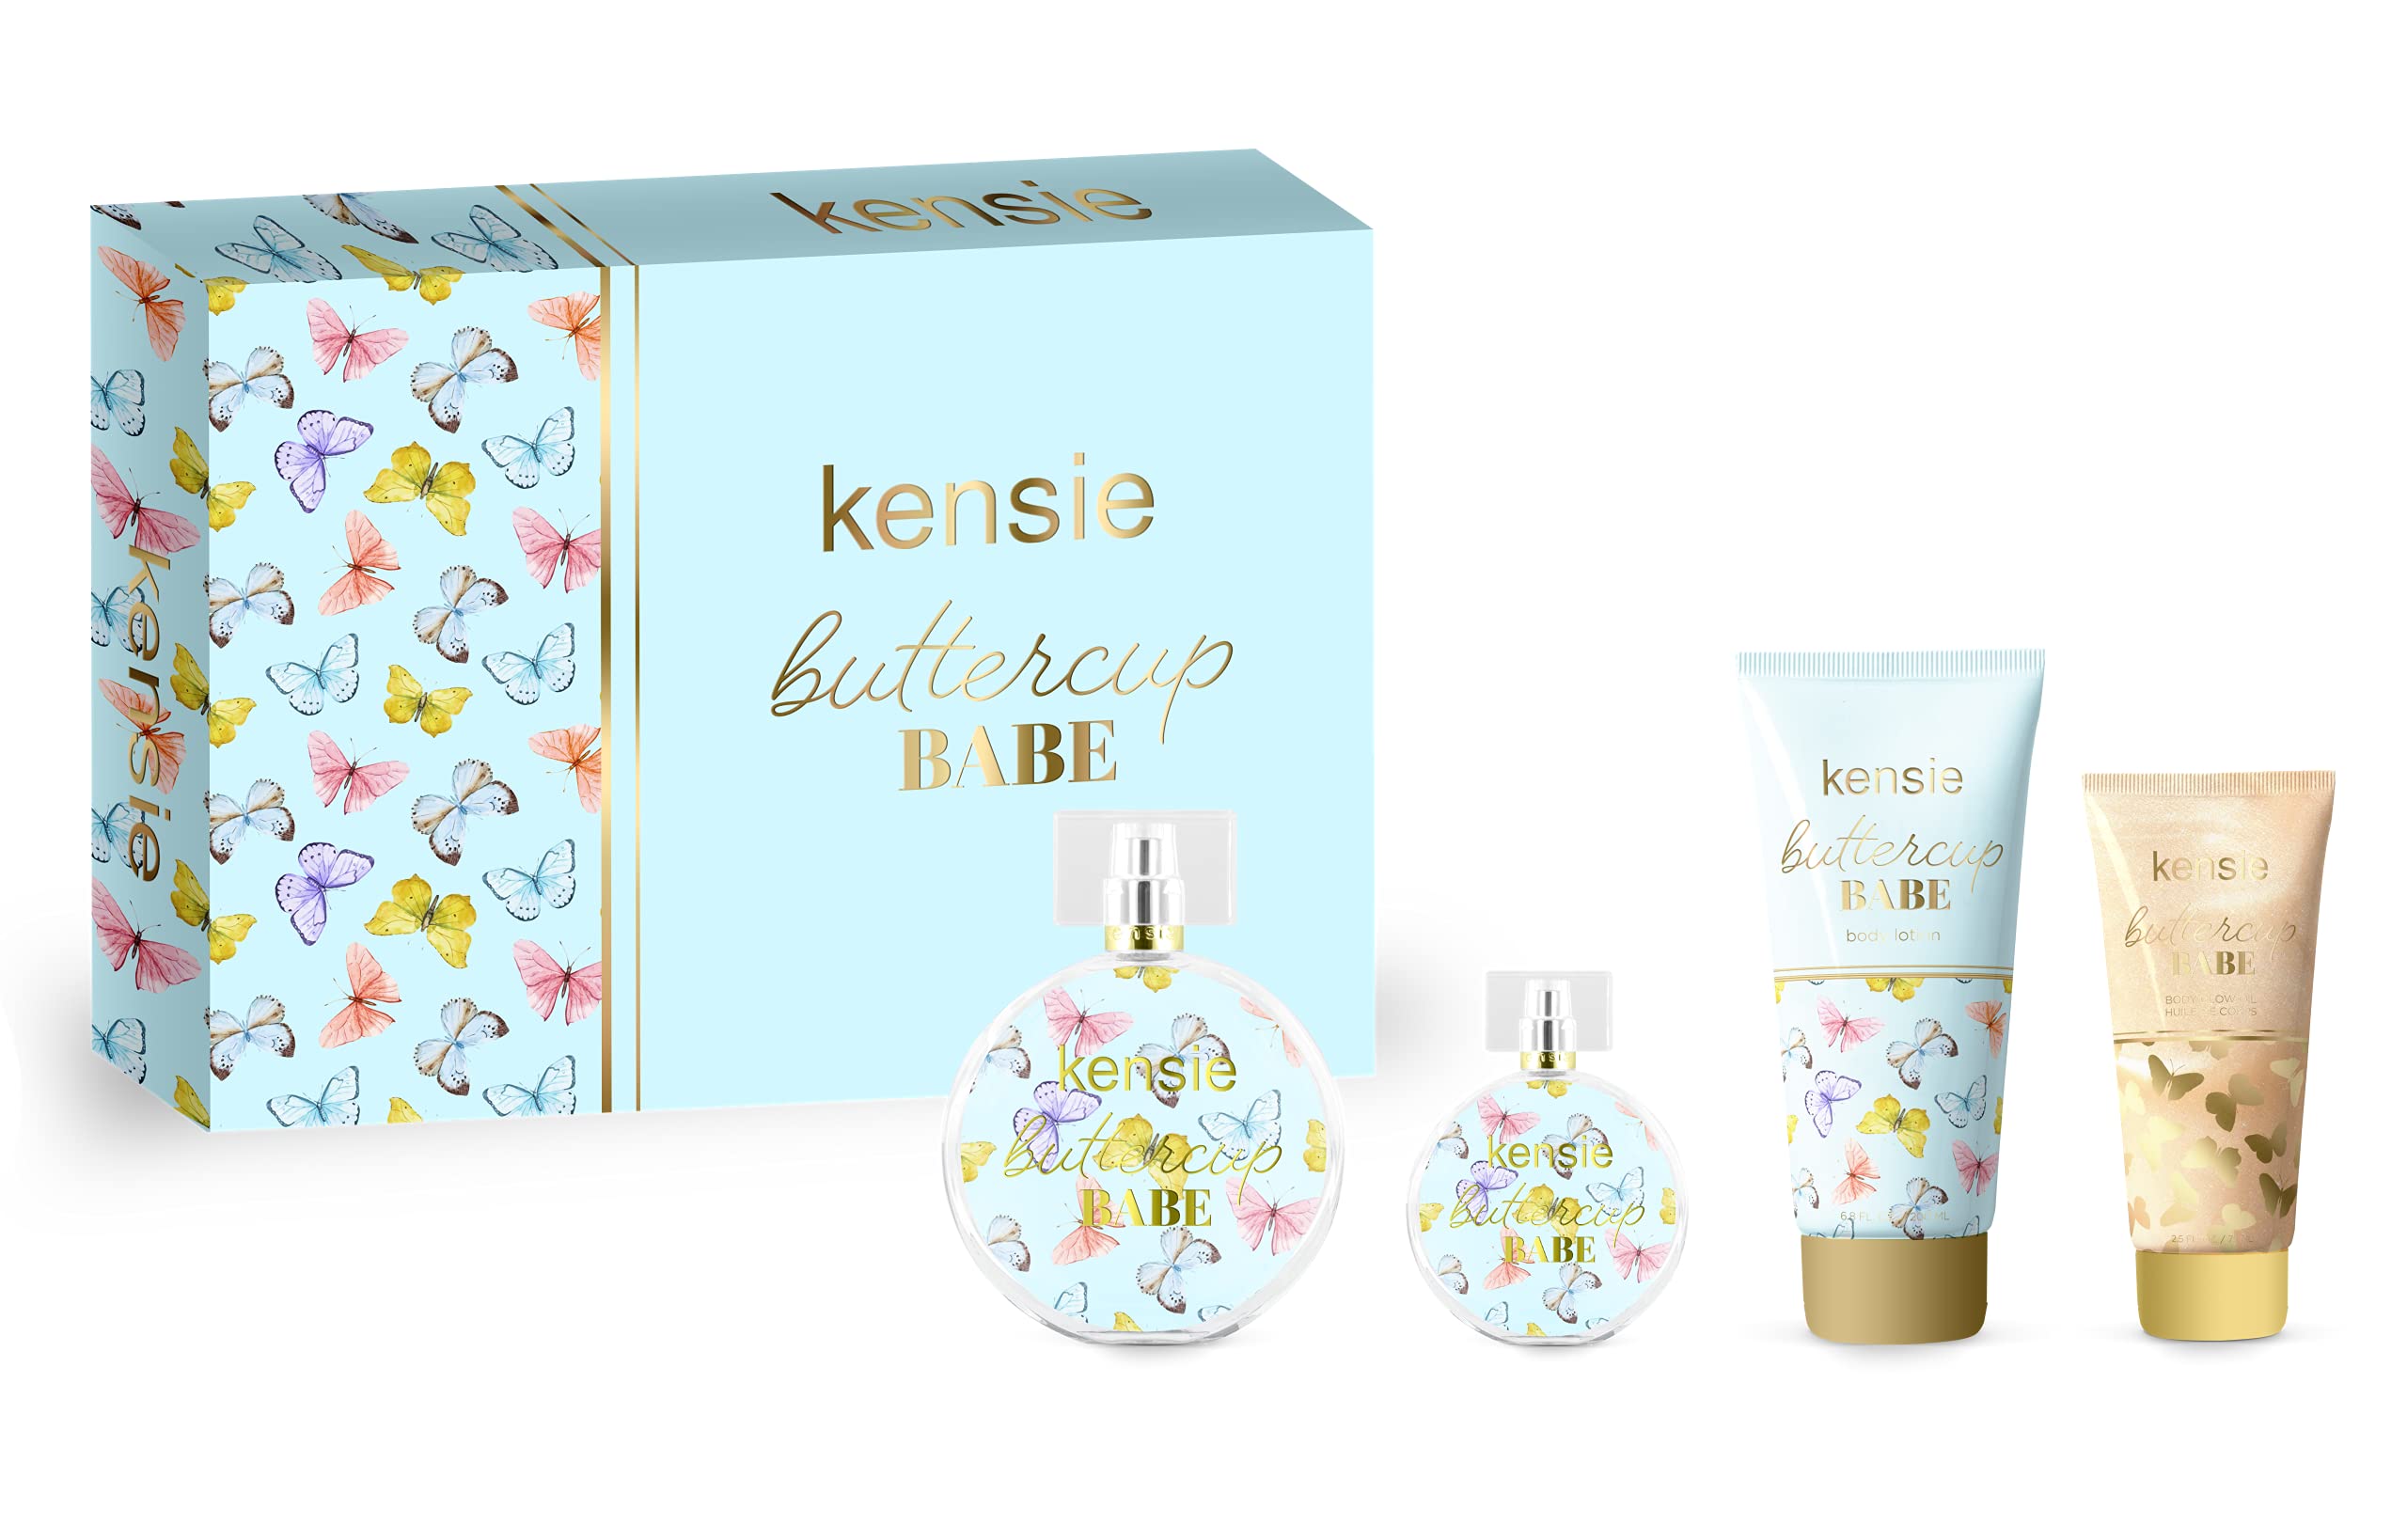 kensie Buttercup Babe Gift Set, 3.4 fluid_ounces